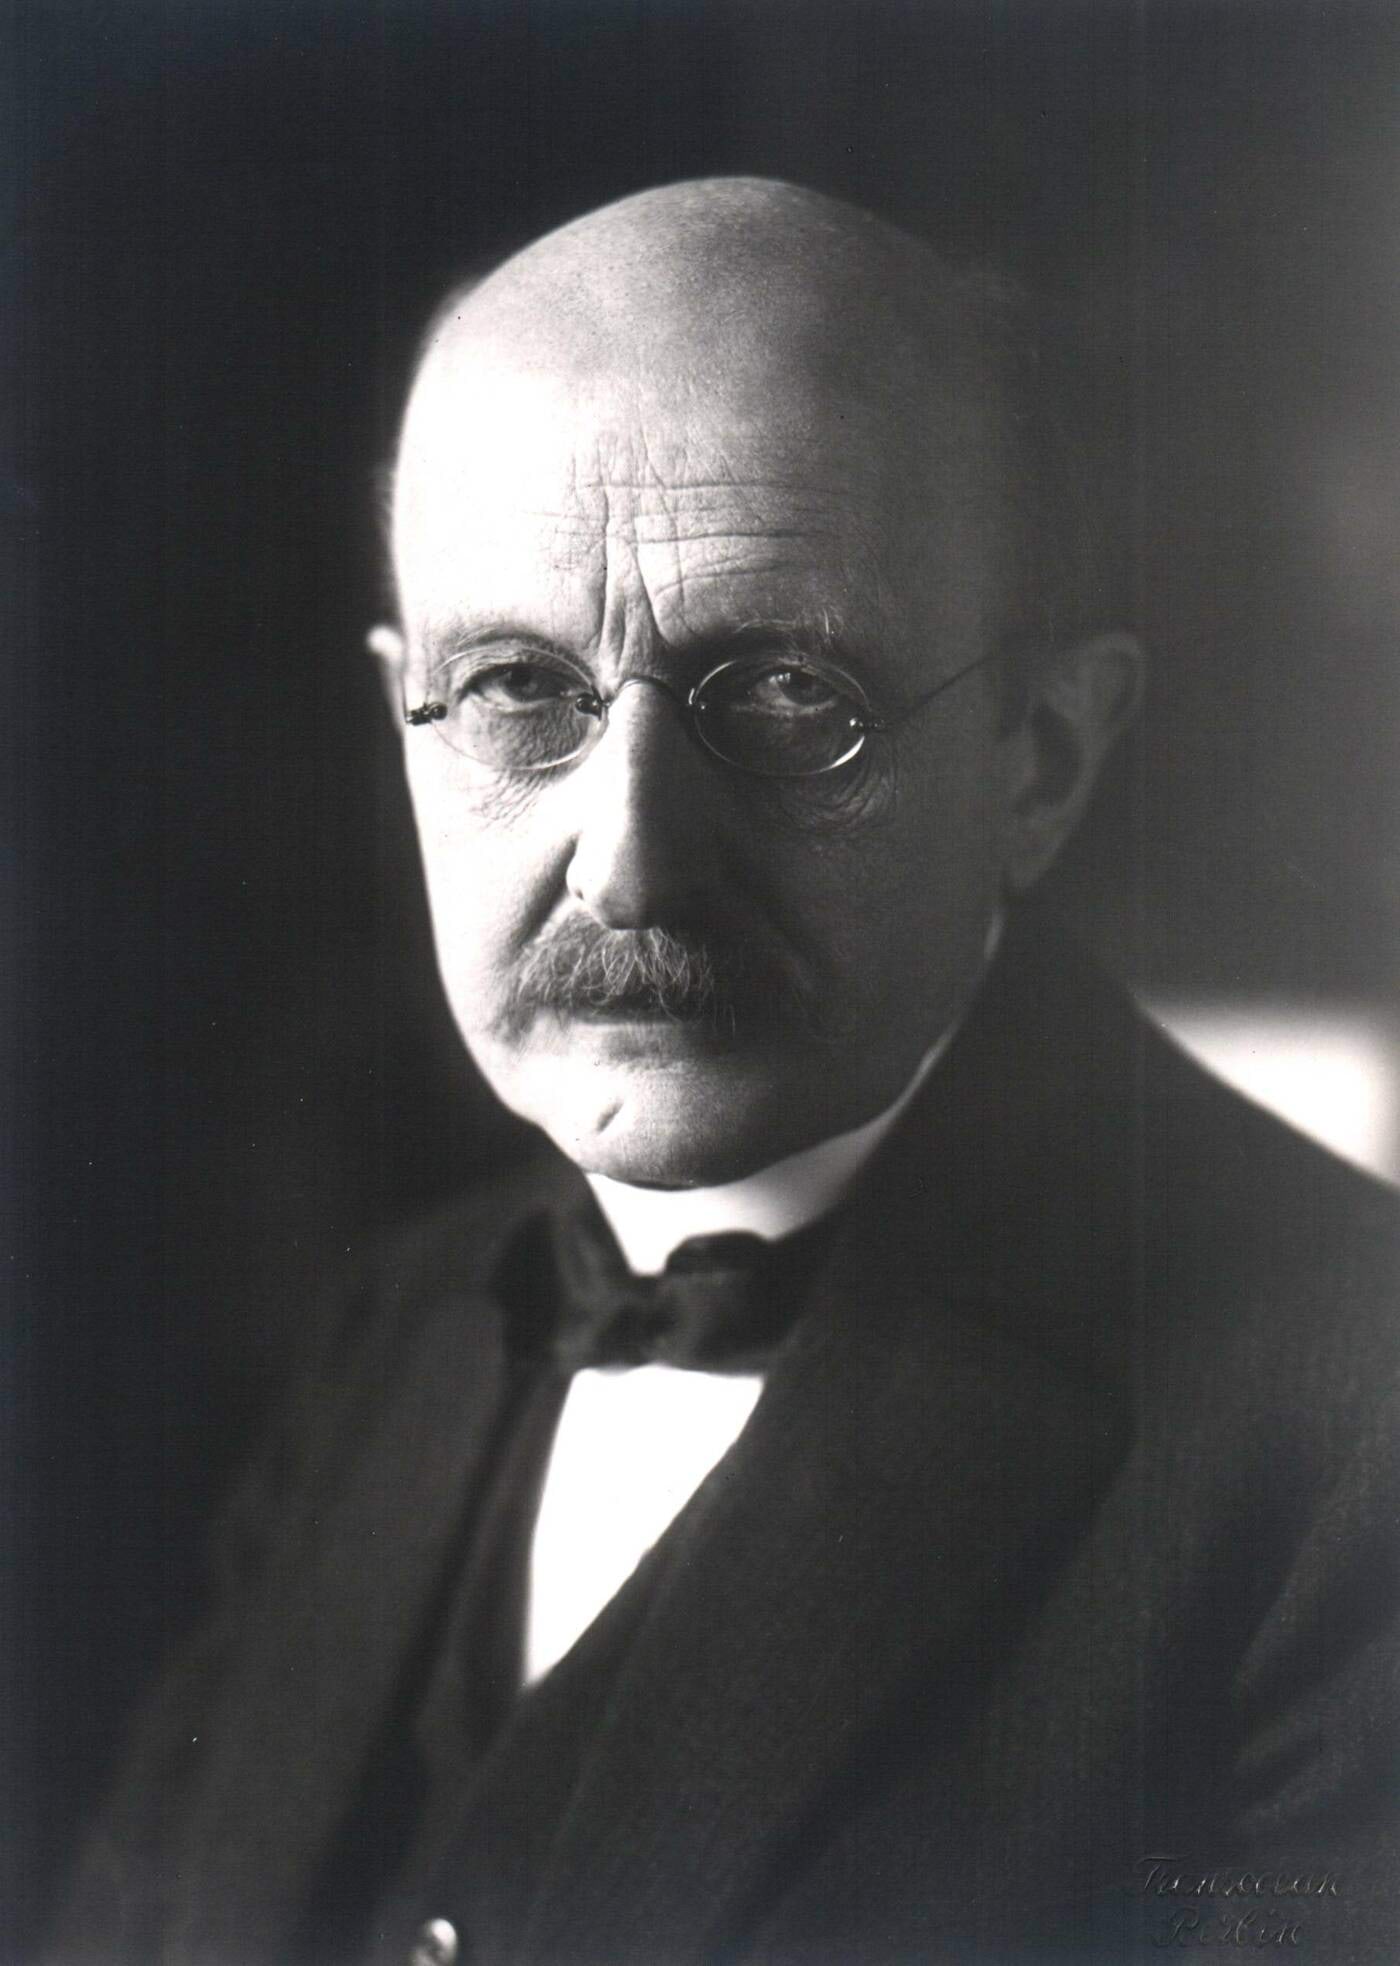 Max Planck (1858-1947)